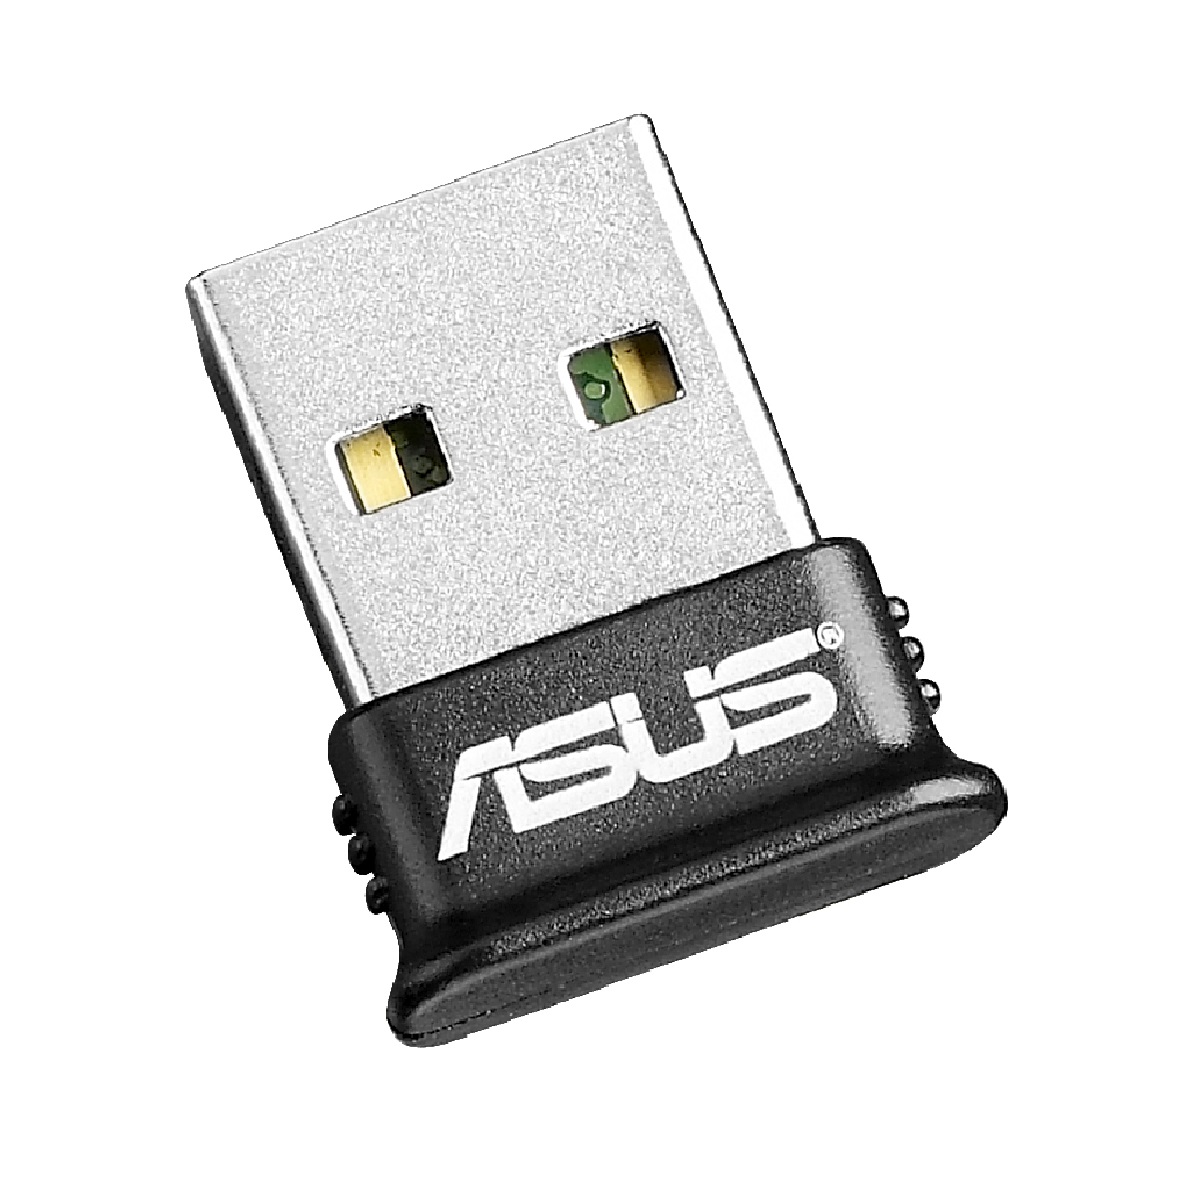 Asus - ASUS USB-BT400 Bluetooth 4.0 USB Adapter